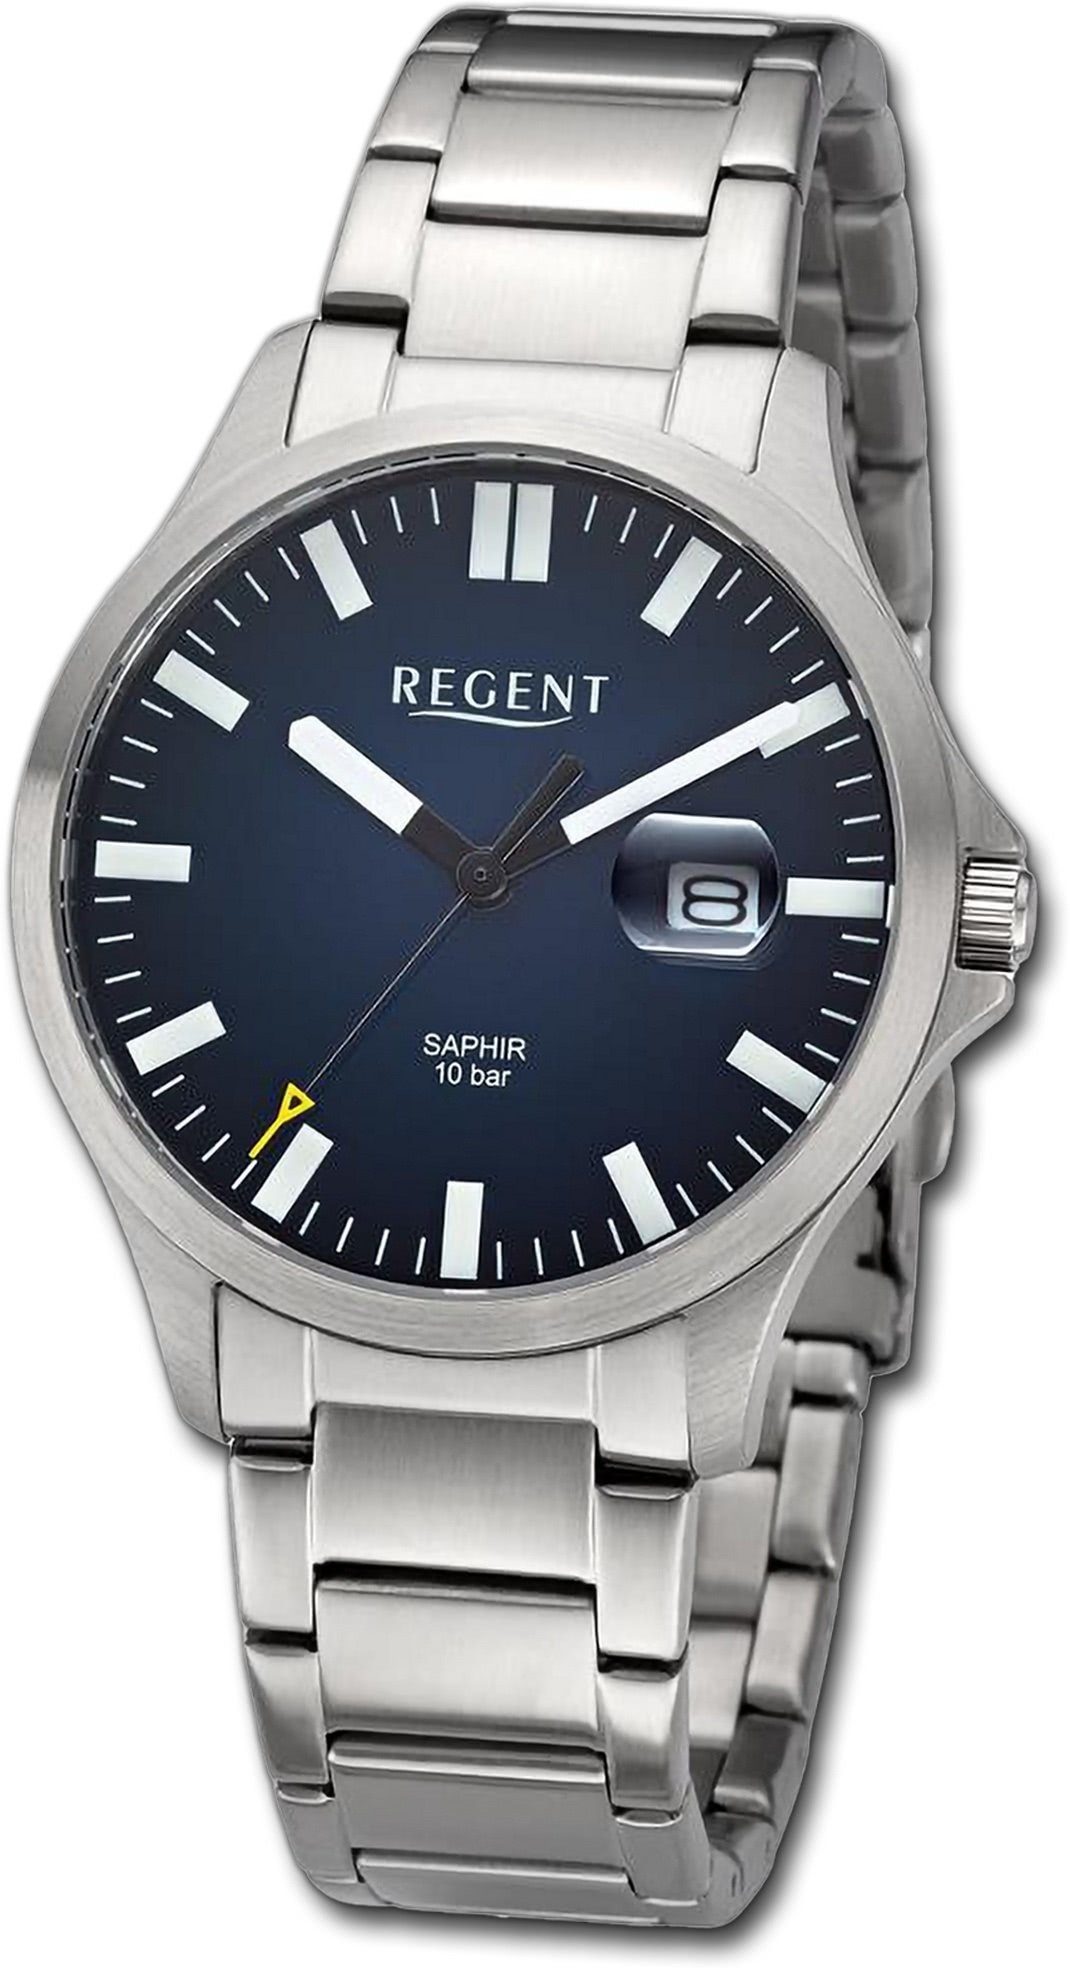 Regent Quarzuhr Regent Armbanduhr silber, Herrenuhr Metallarmband (ca. groß Gehäuse, rundes 40mm) Analog, extra Herren